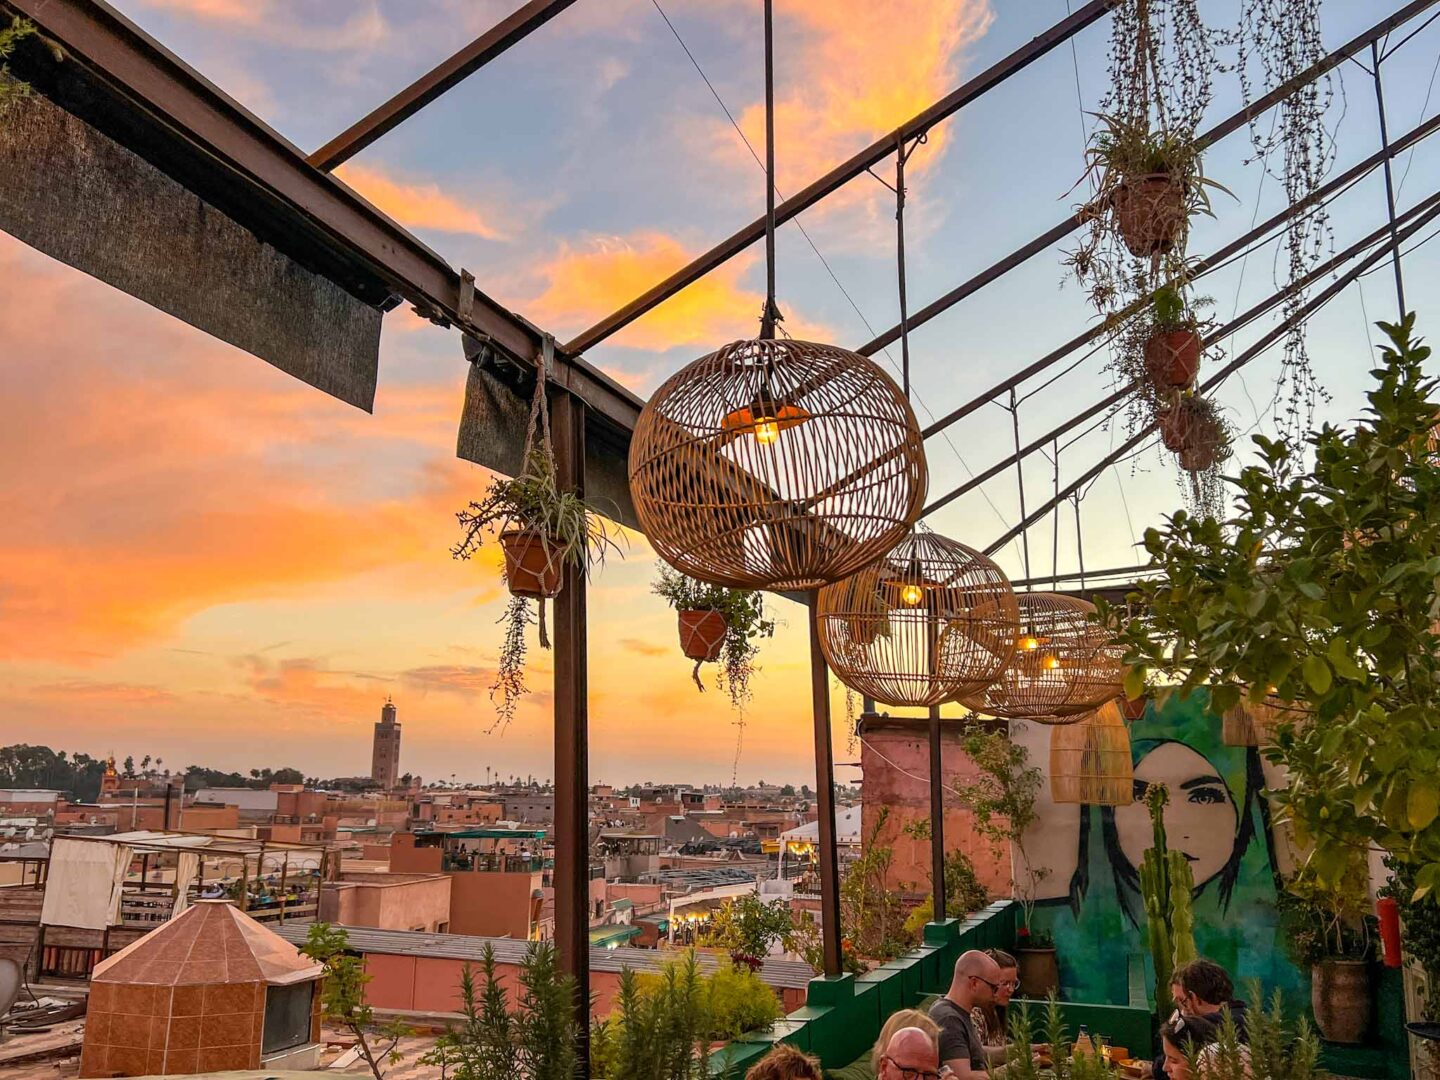 Best Restaurants in Marrakech, l'mida restaurant rooftop at sunset